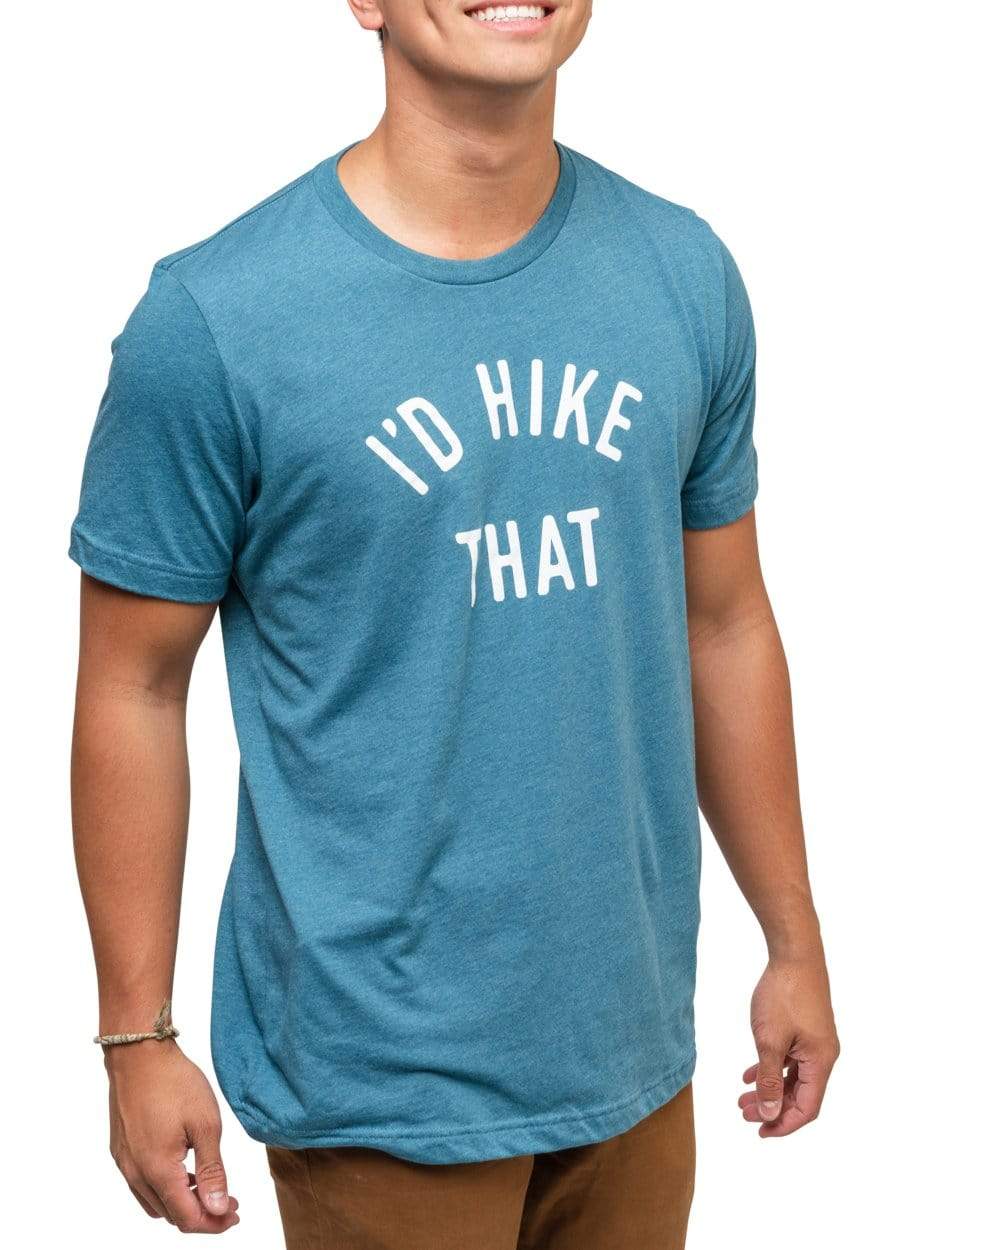 I'd Rather Be Hiking T-shirt, Hiking T-shirt, Hiking Shirt, Men's